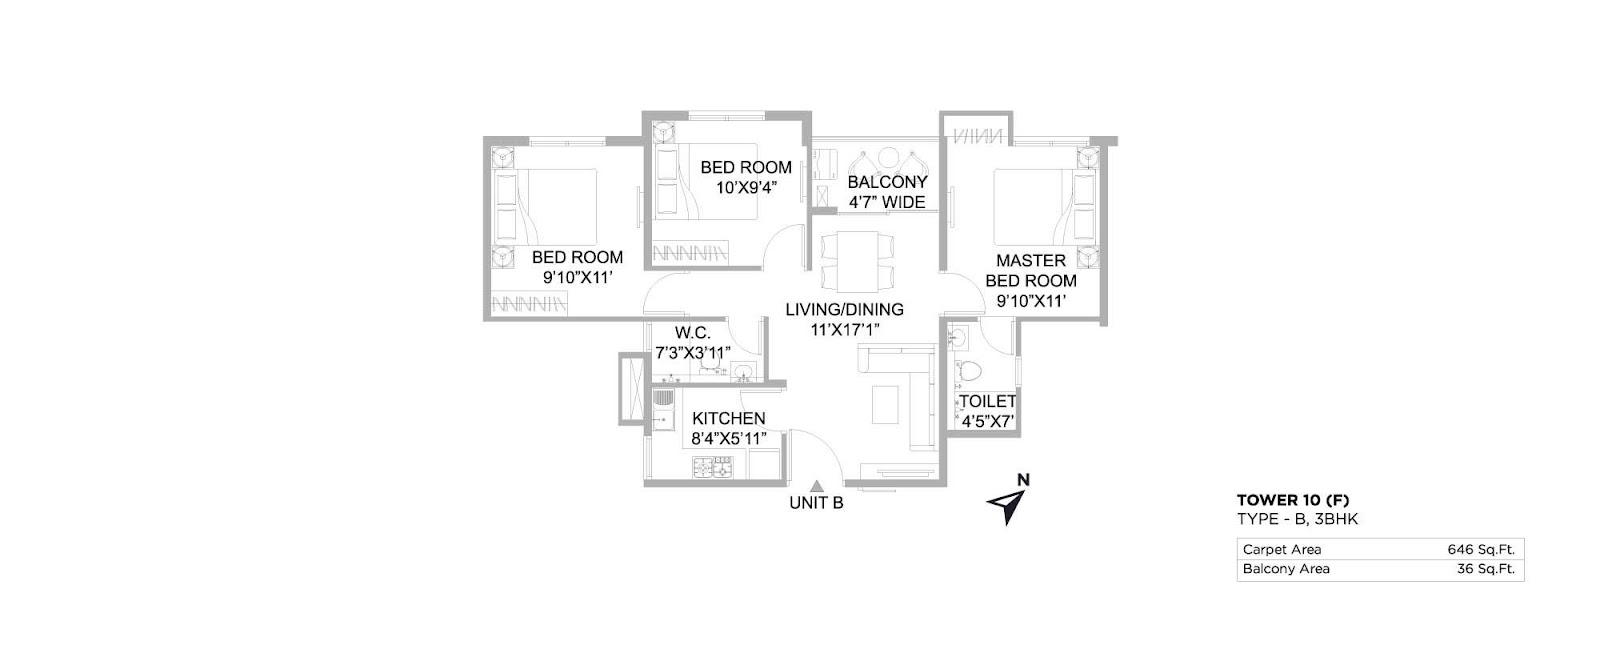 3 bhk apartment plan